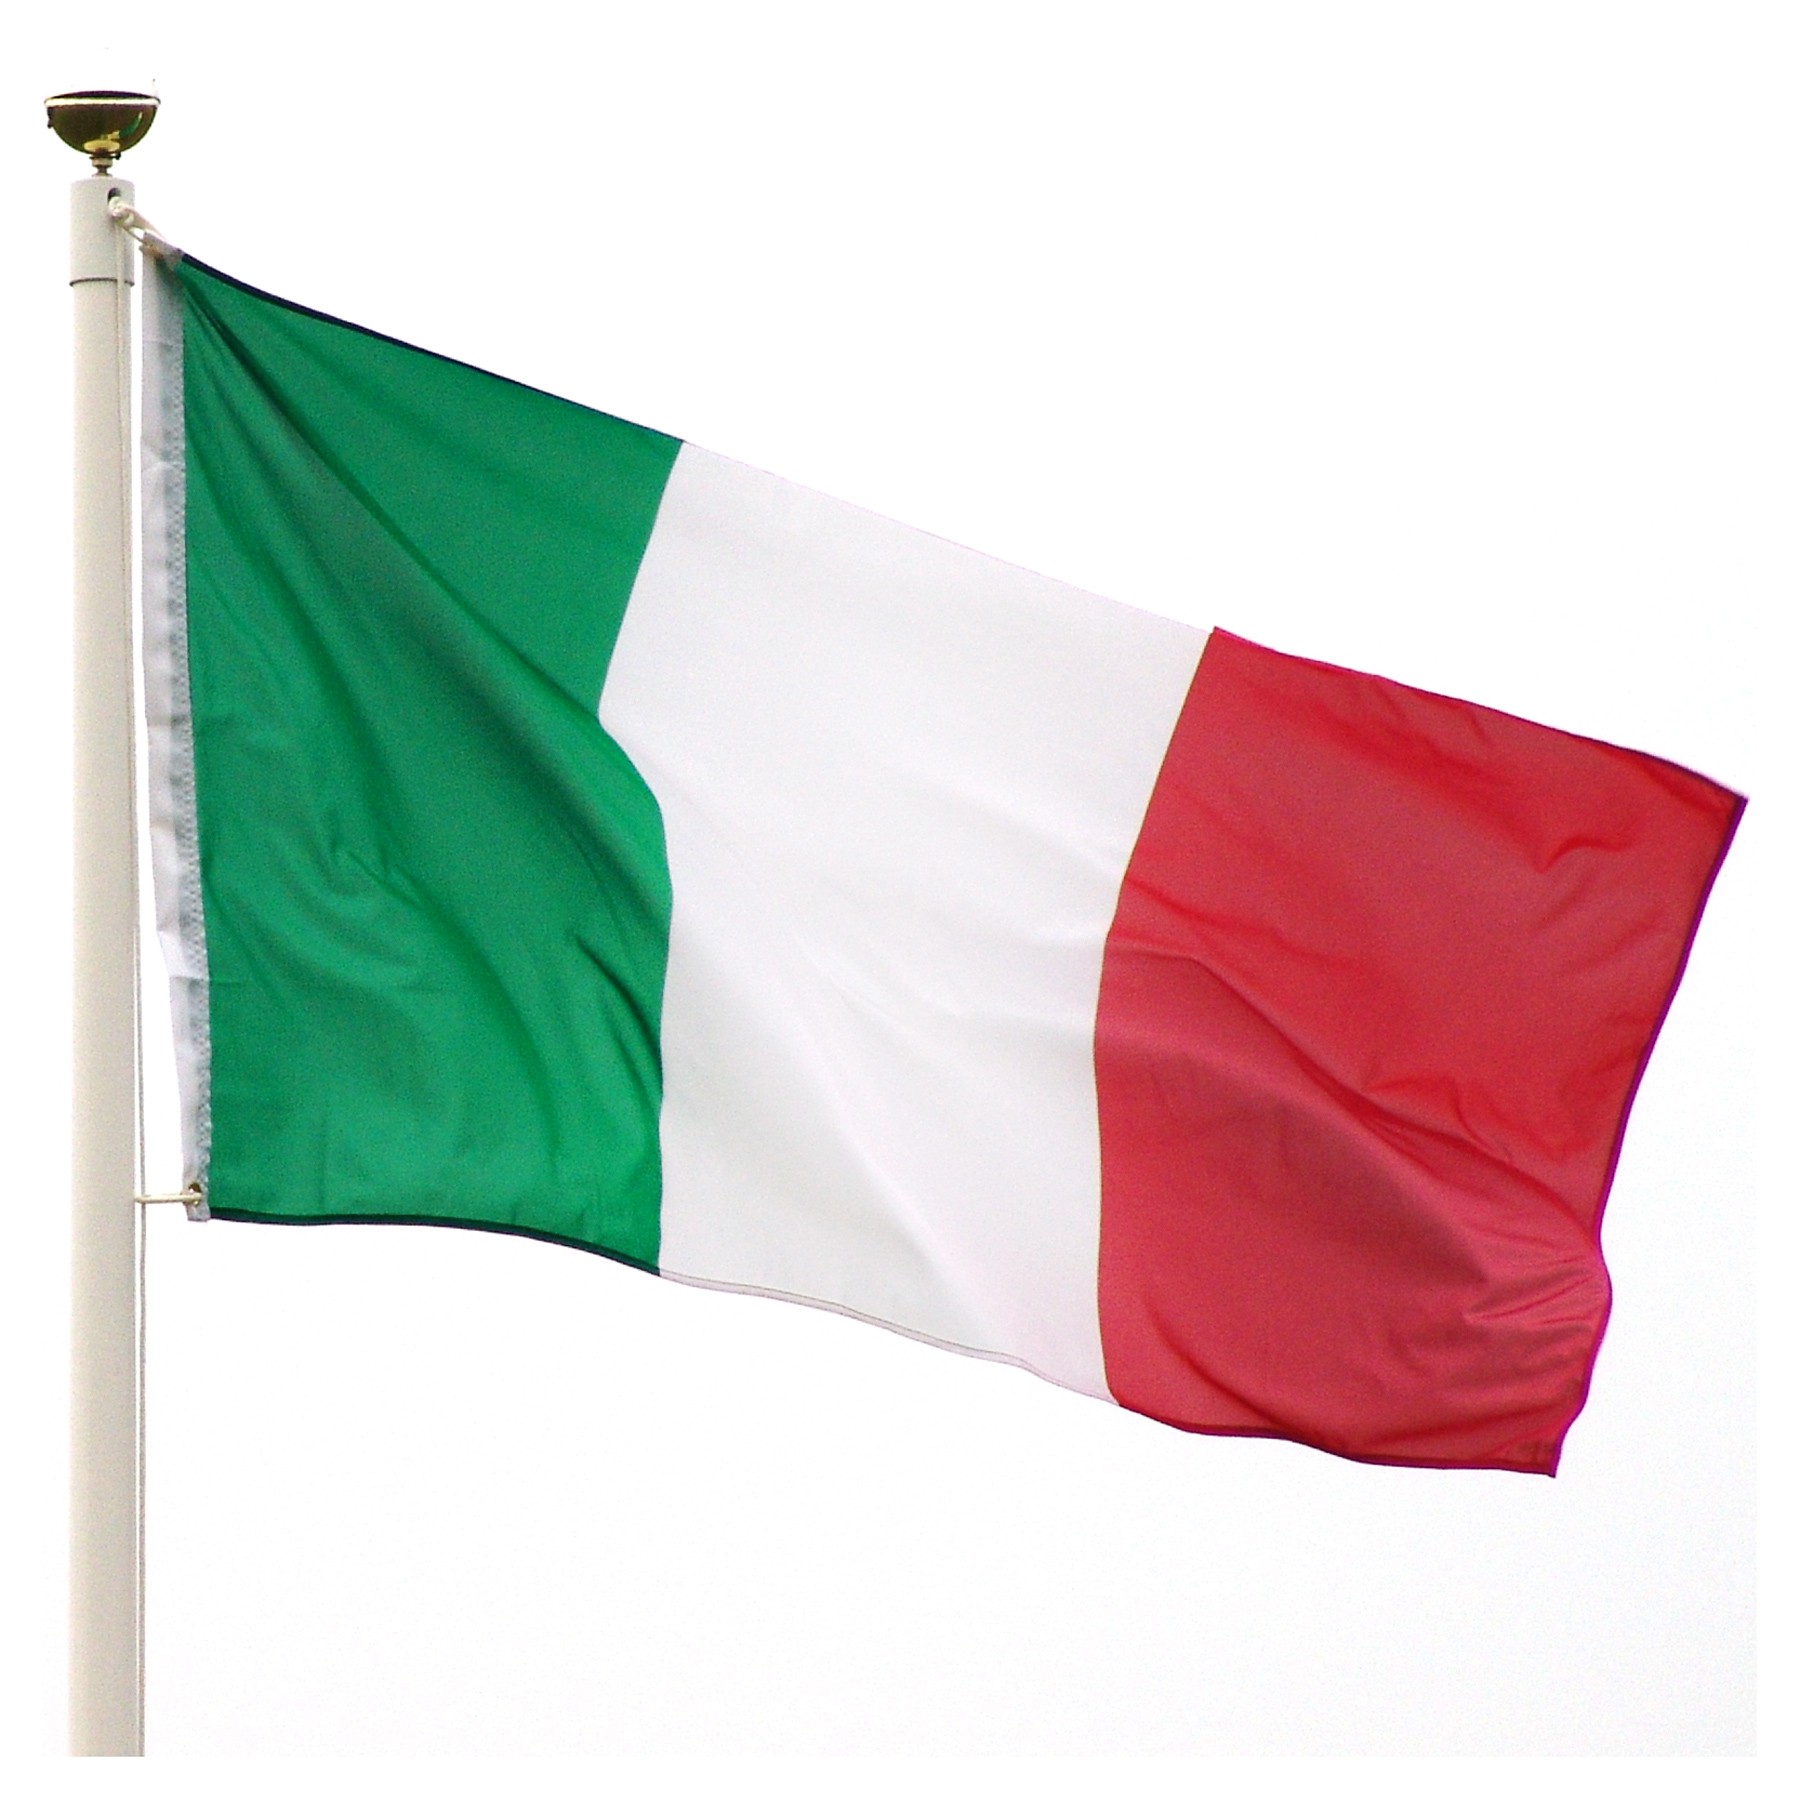 Italian Stocks Hit With Financial Transaction Tax (